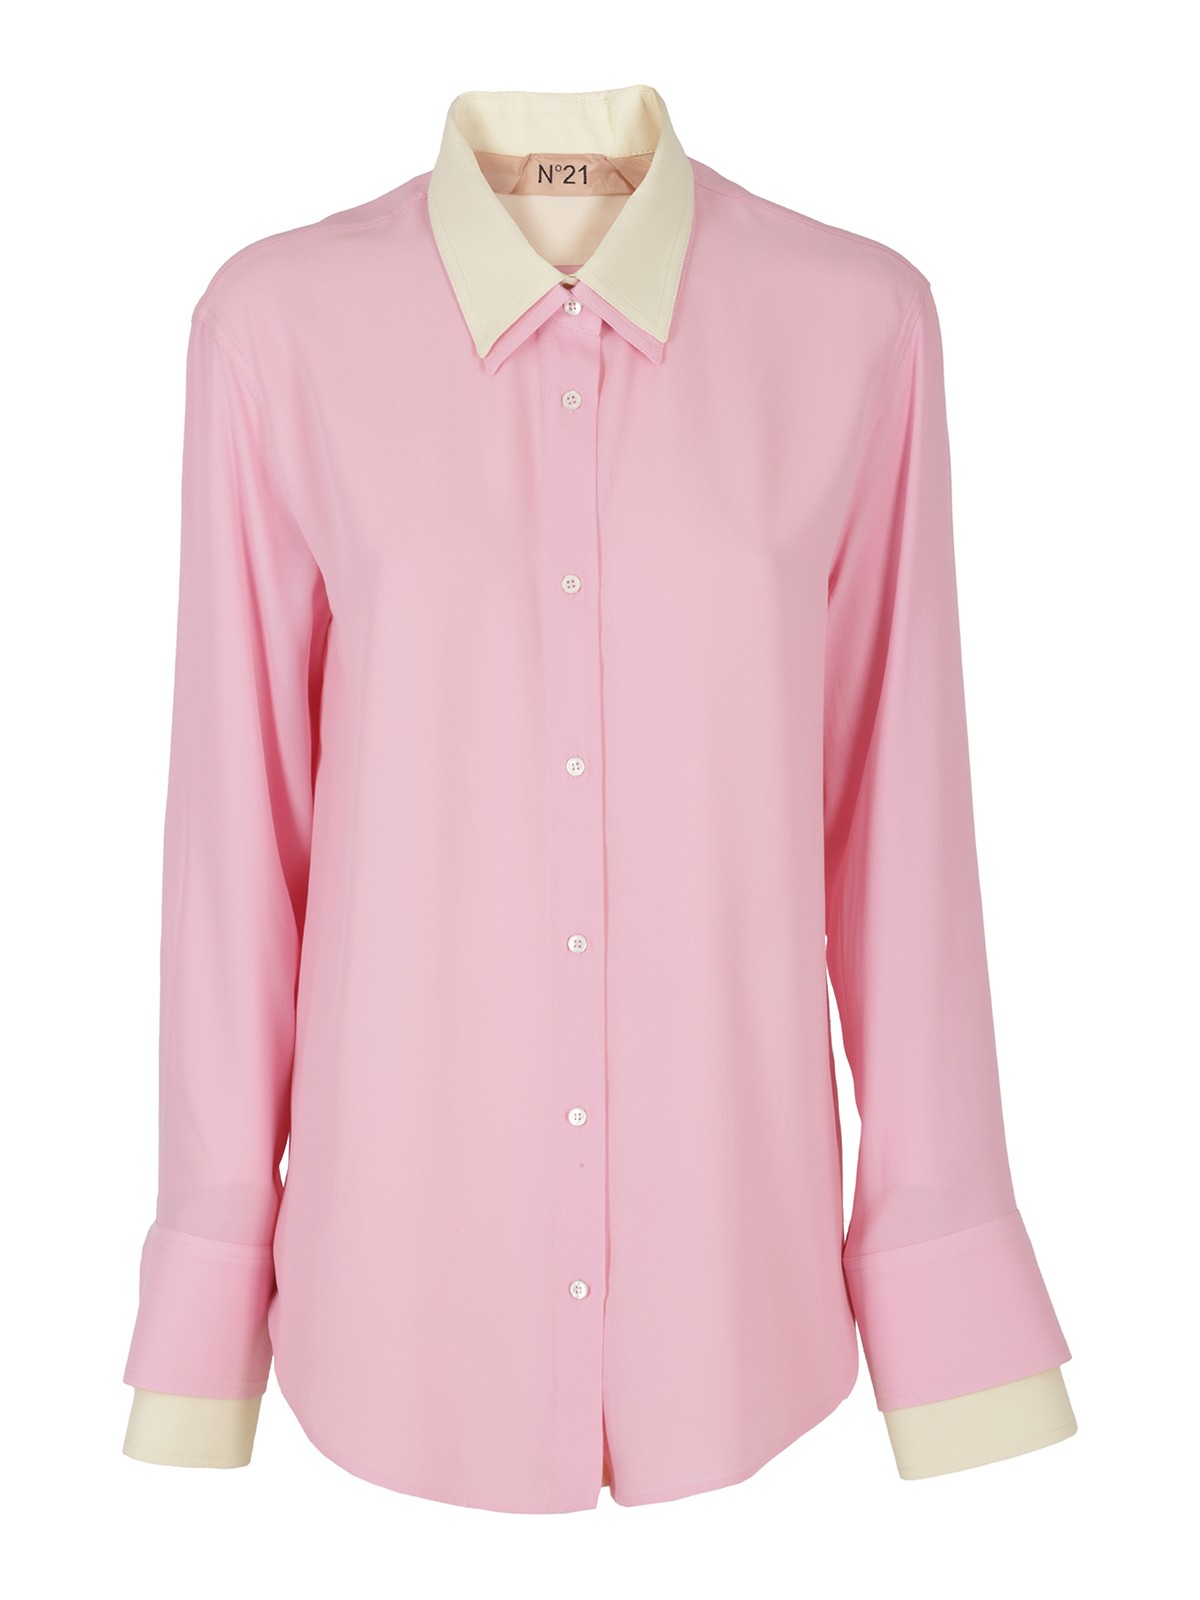 Shirts N°21 - Two-tone shirt - G03251114210 | Shop online at iKRIX